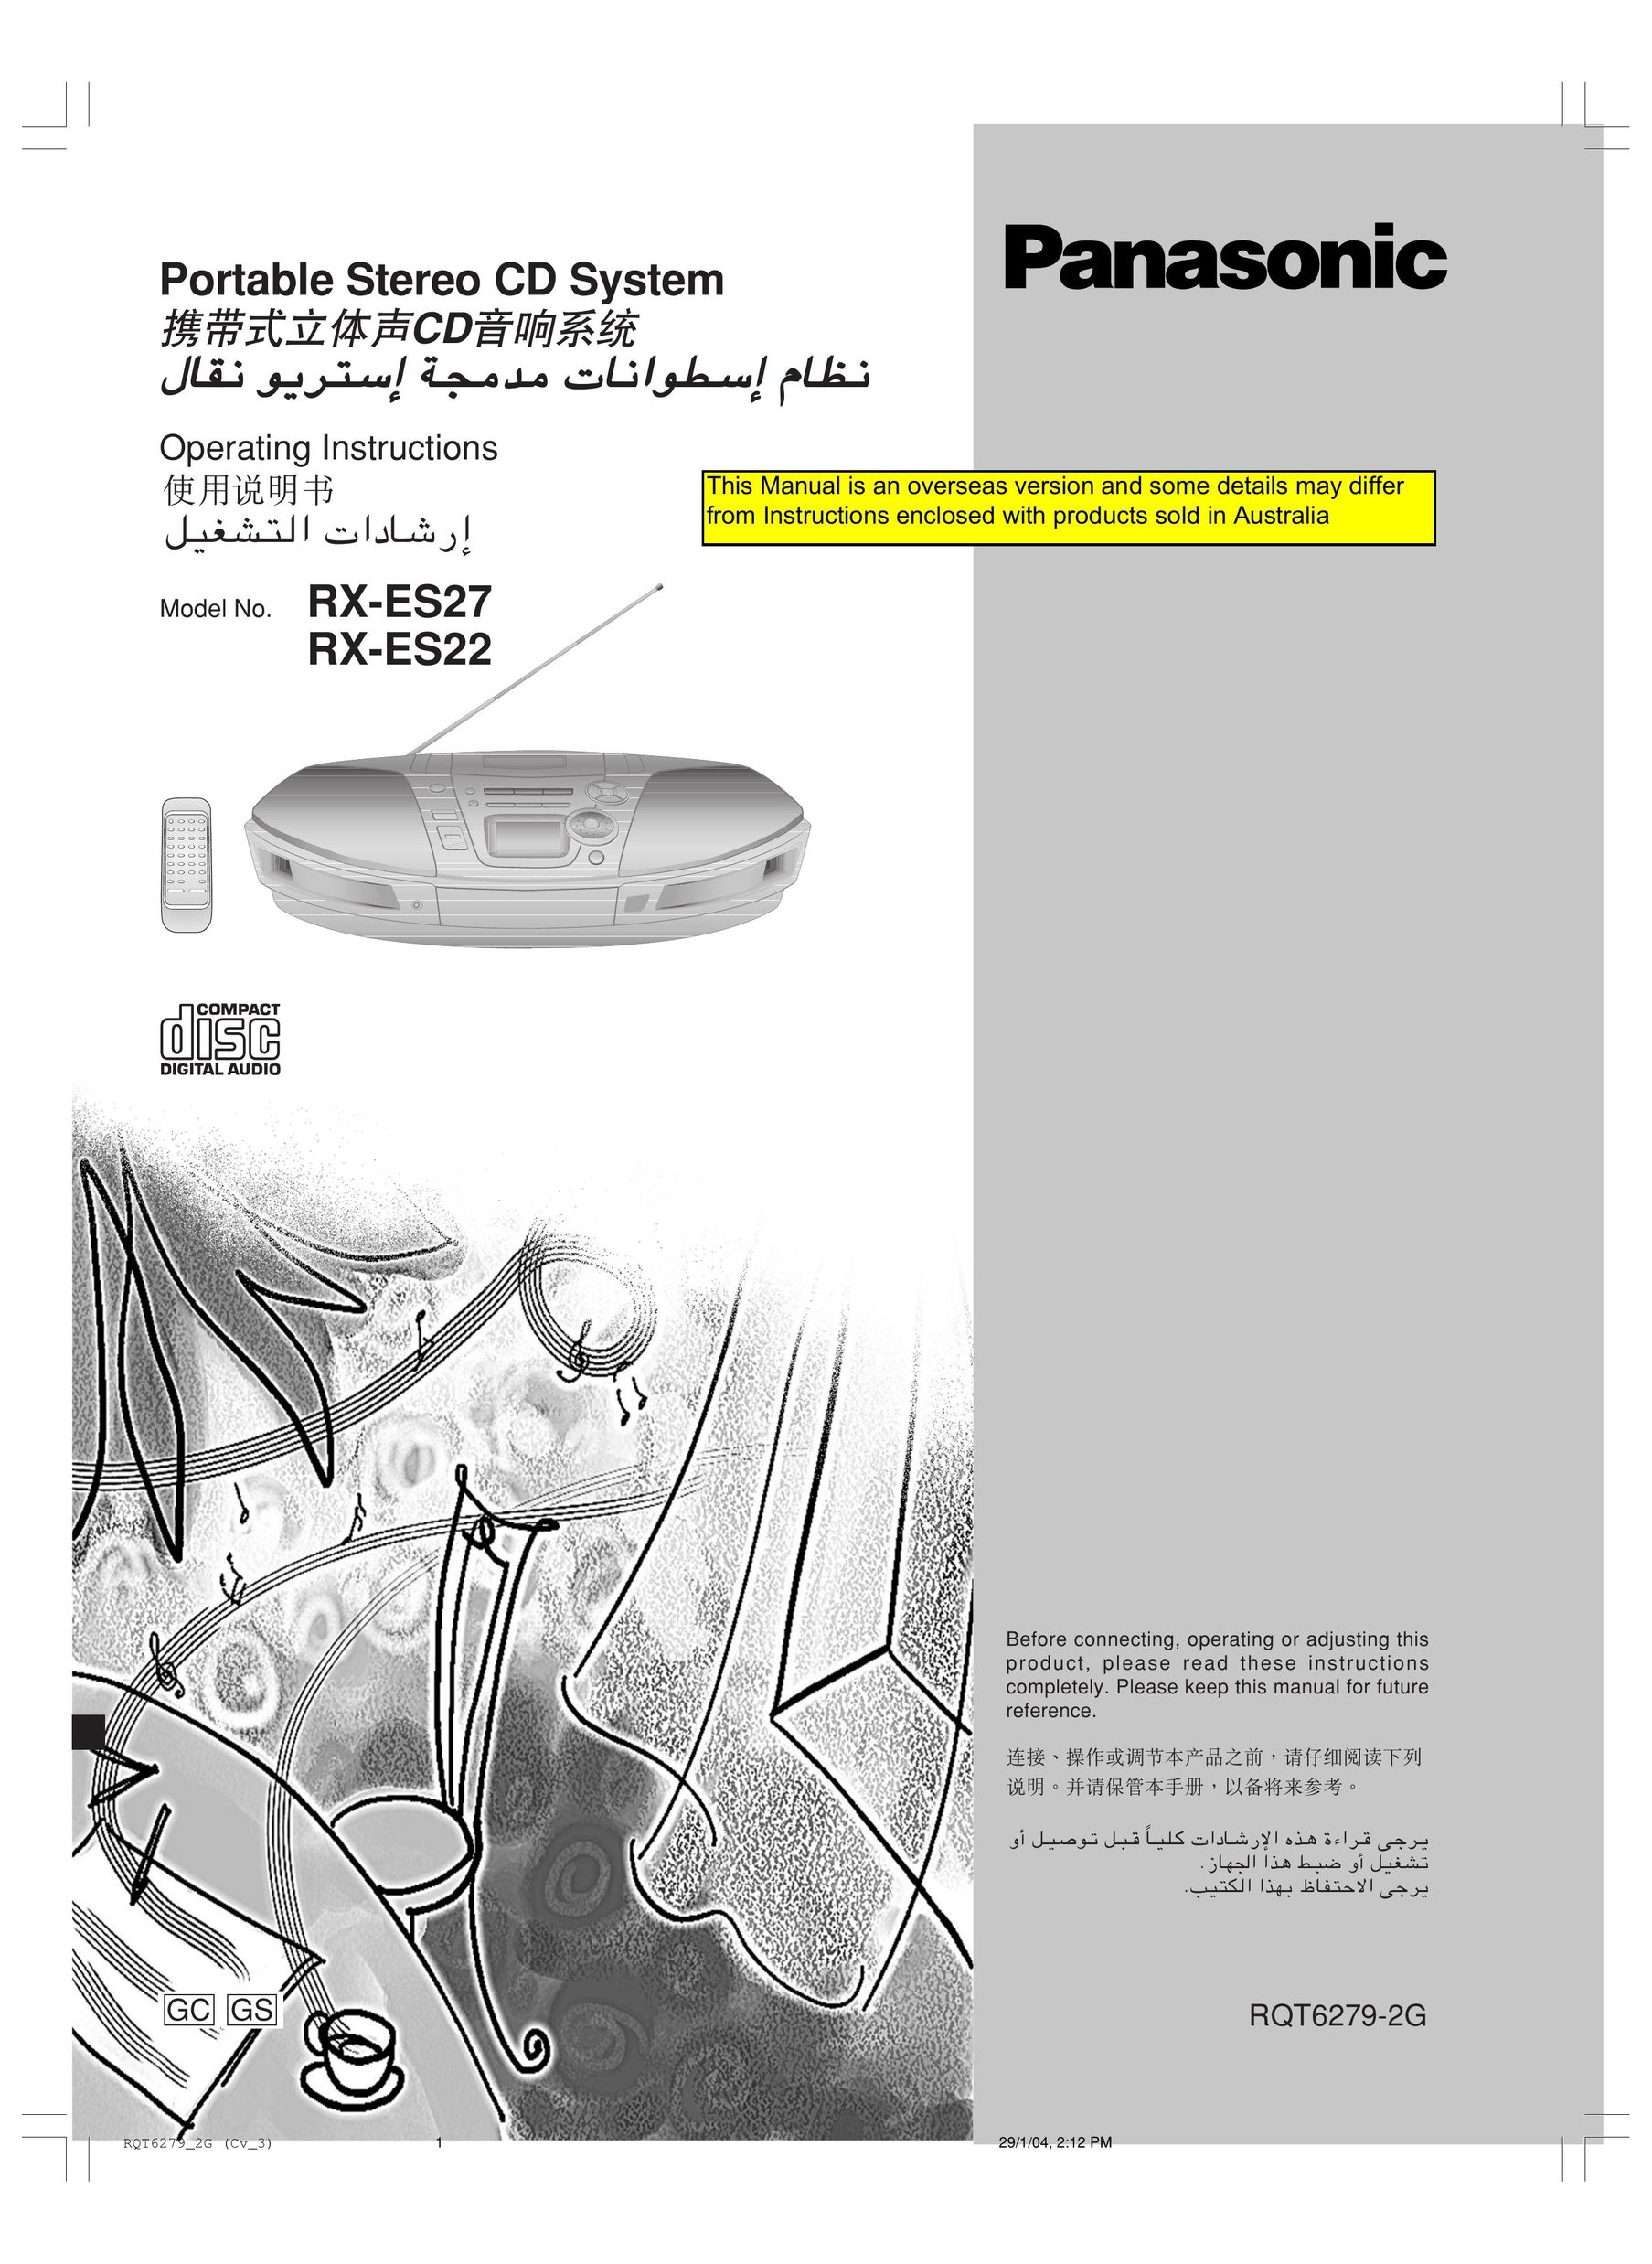 Panasonic RX-ES27 Portable CD Player User Manual